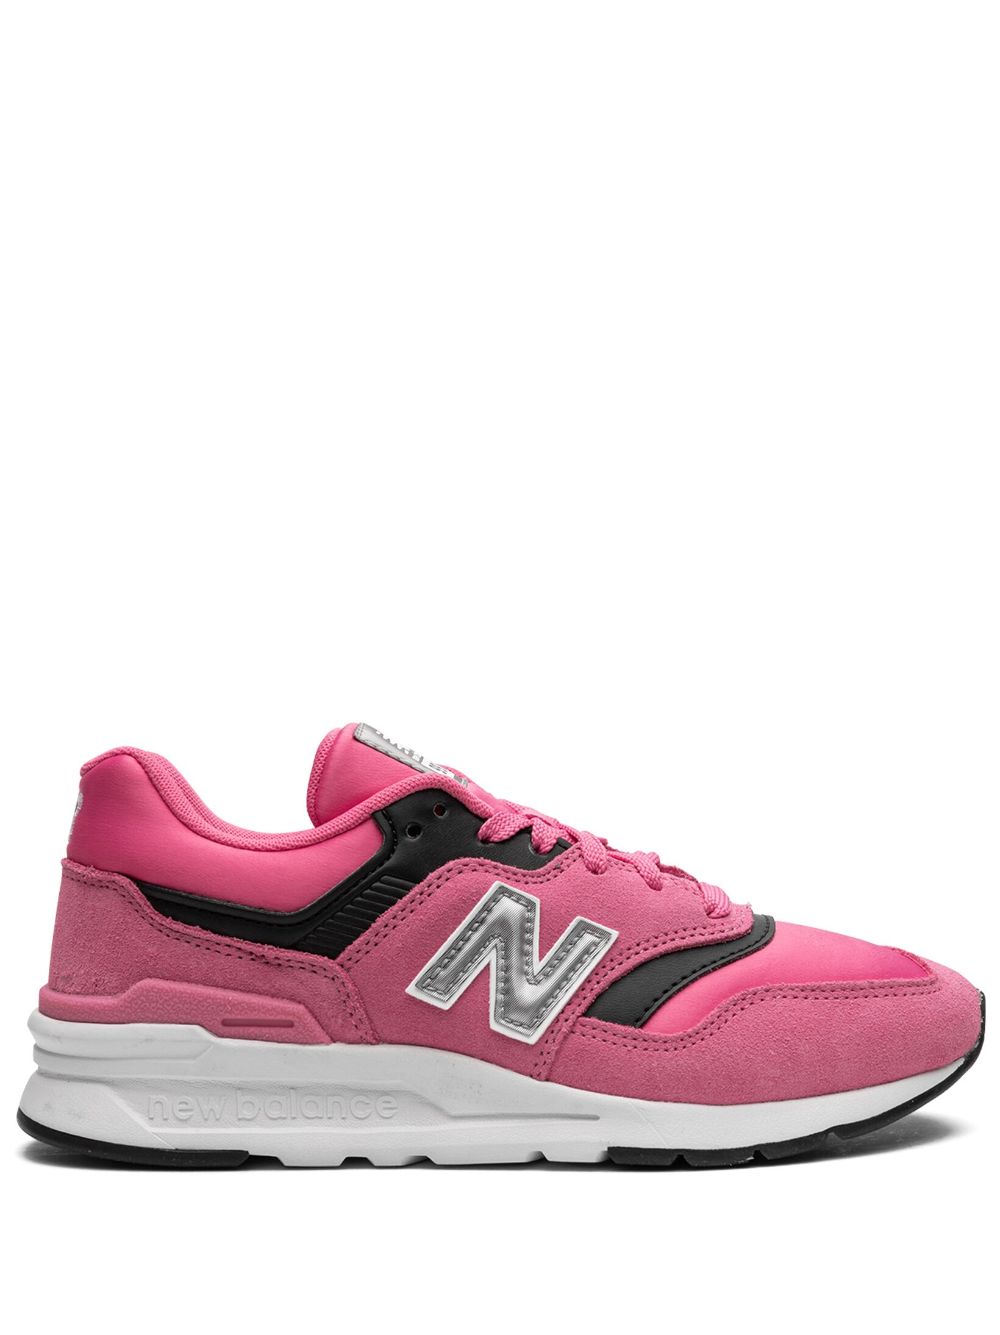 New Balance 997 "Pink" sneakers von New Balance